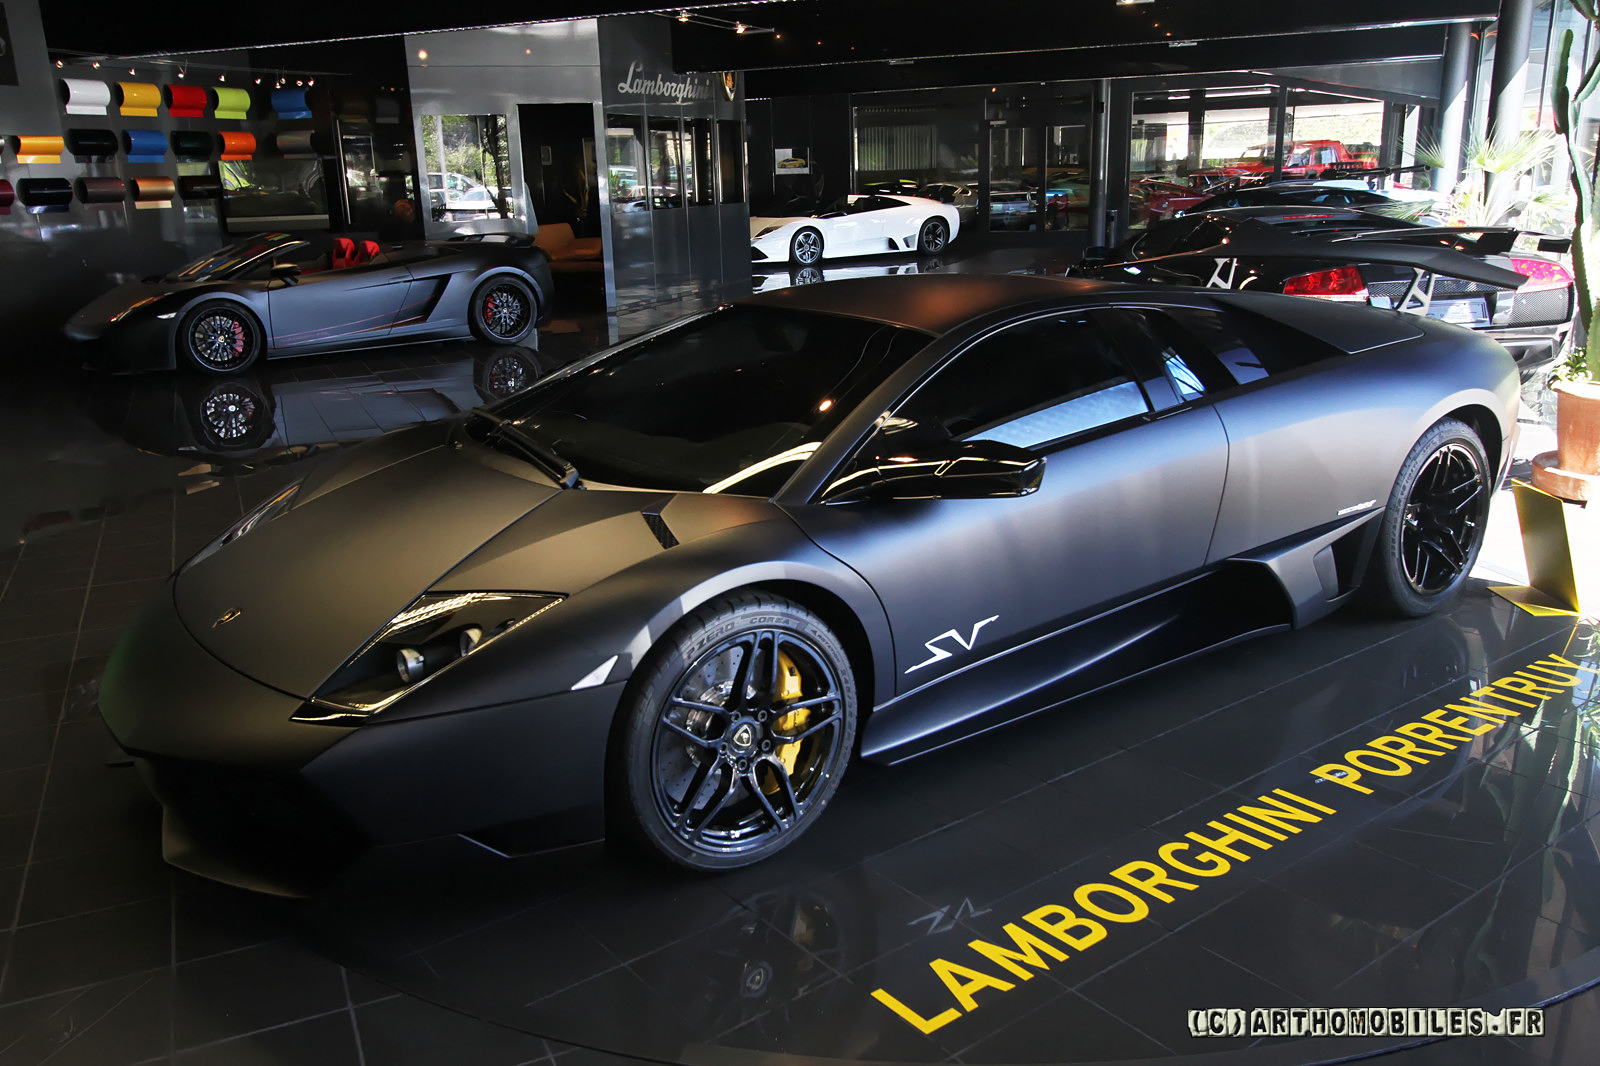 Lamborghini dealer in Switzerland - sick pics - Teamspeed.com